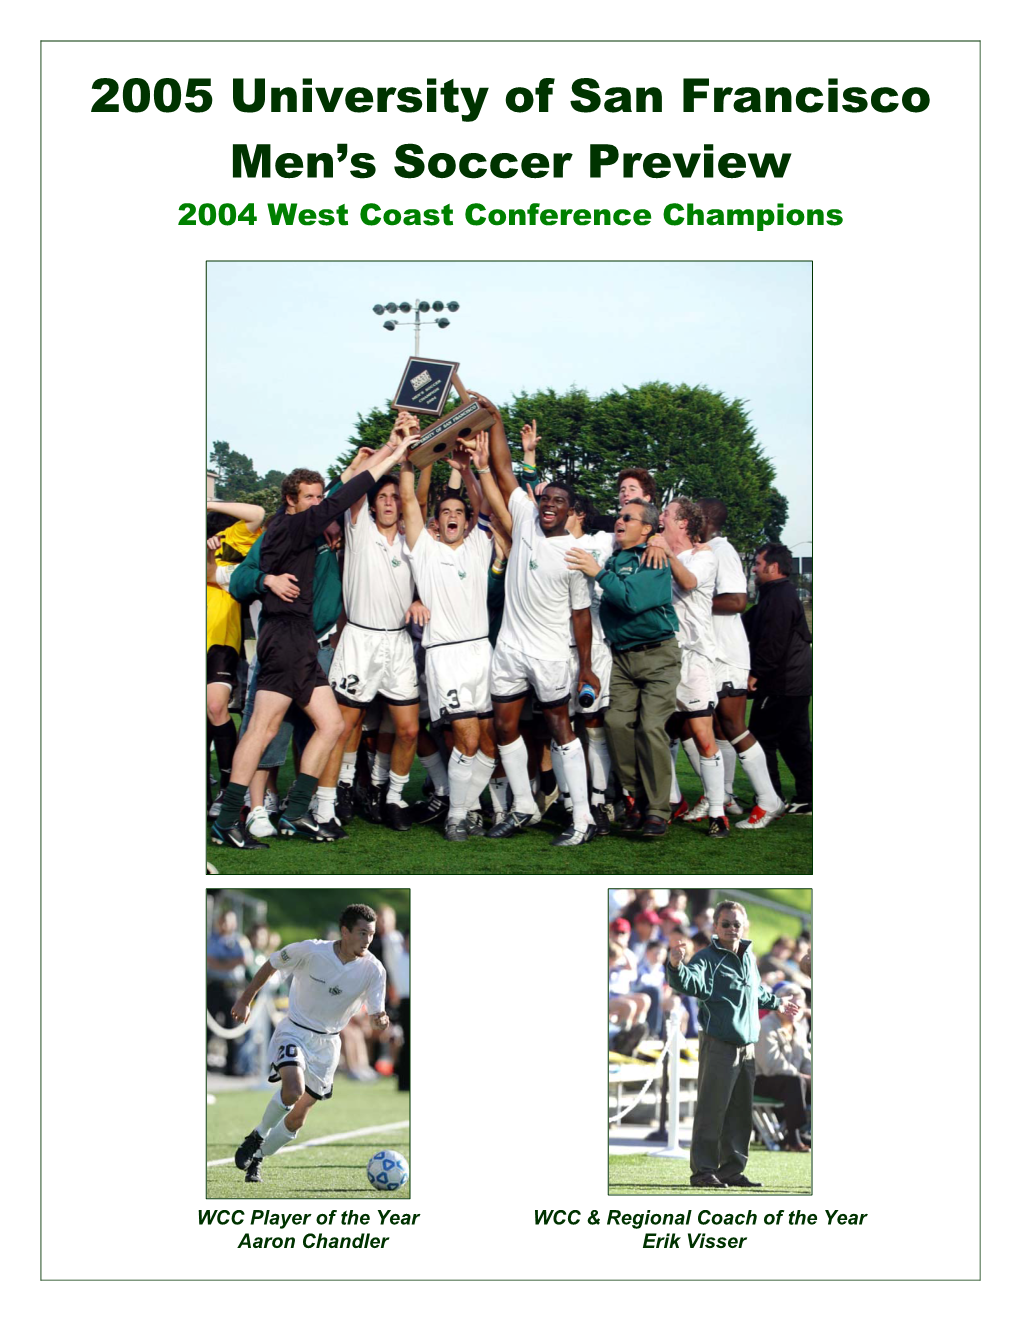 2005 University of San Francisco Men's Soccer Preview